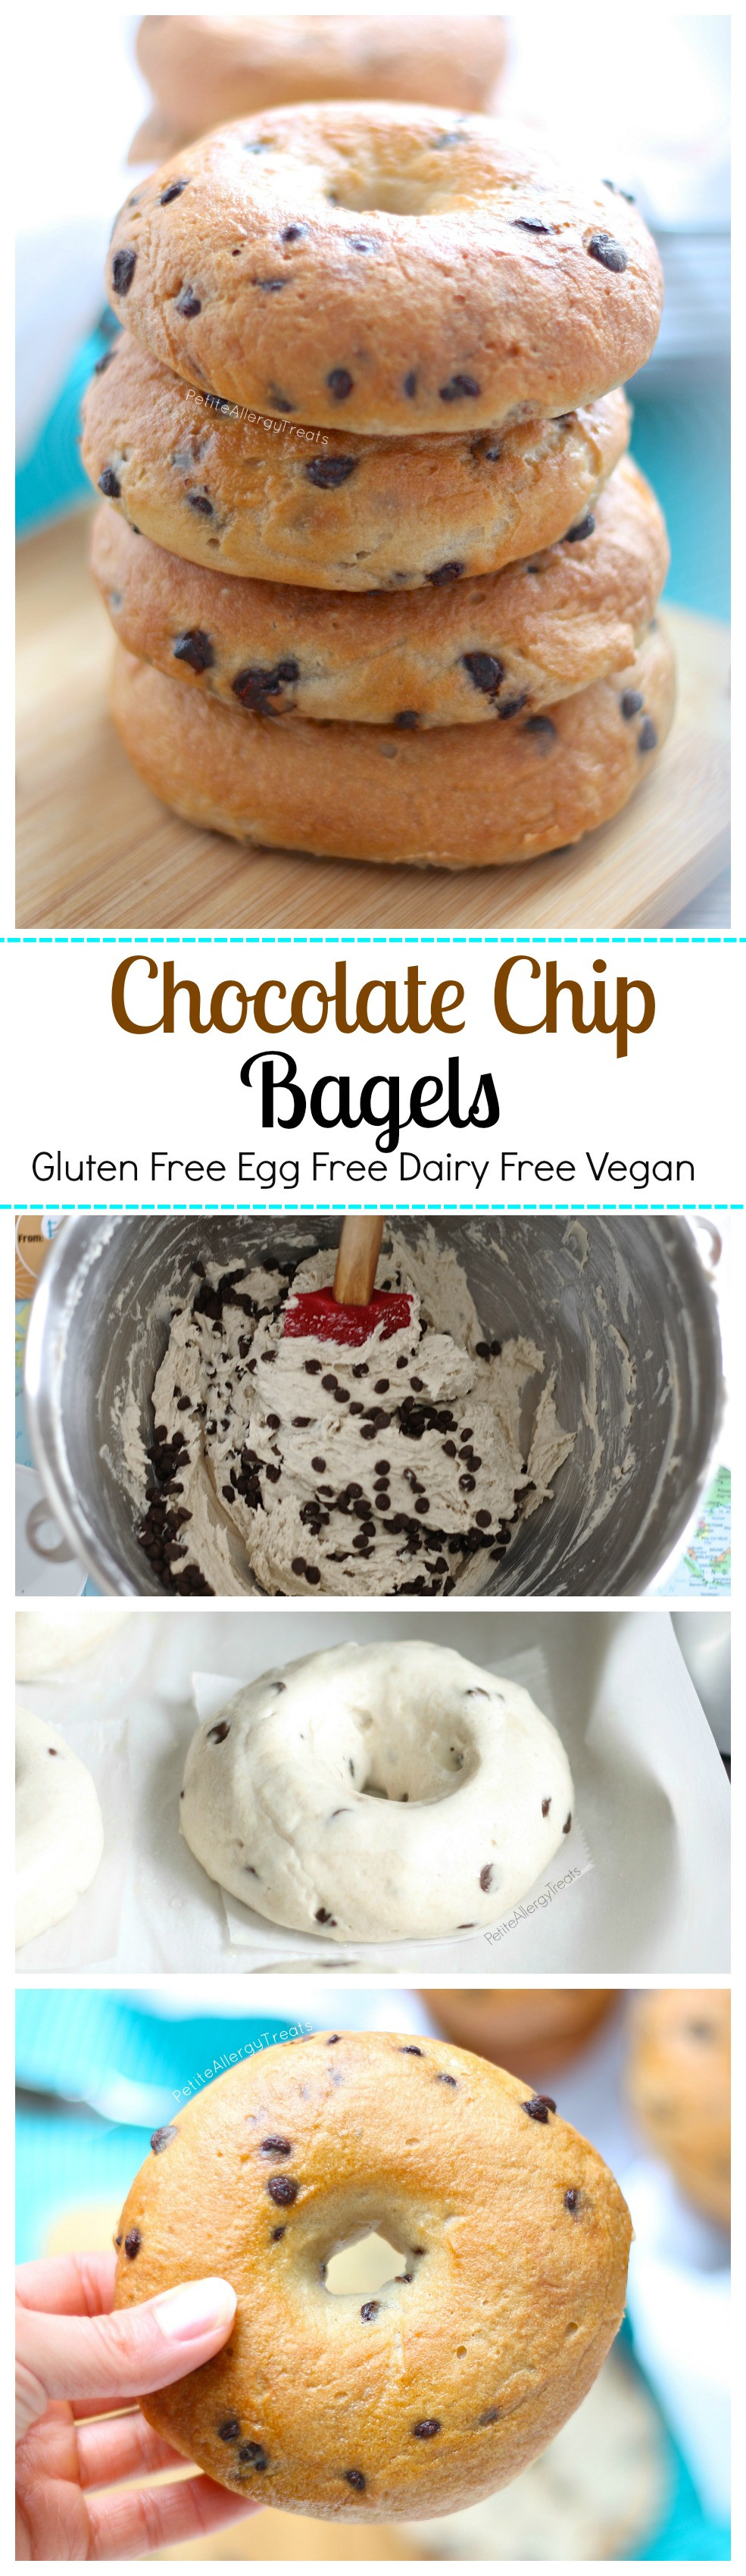 Are Bagels Dairy Free
 Chocolate Chip Bagels Egg Free Gluten Free Vegan